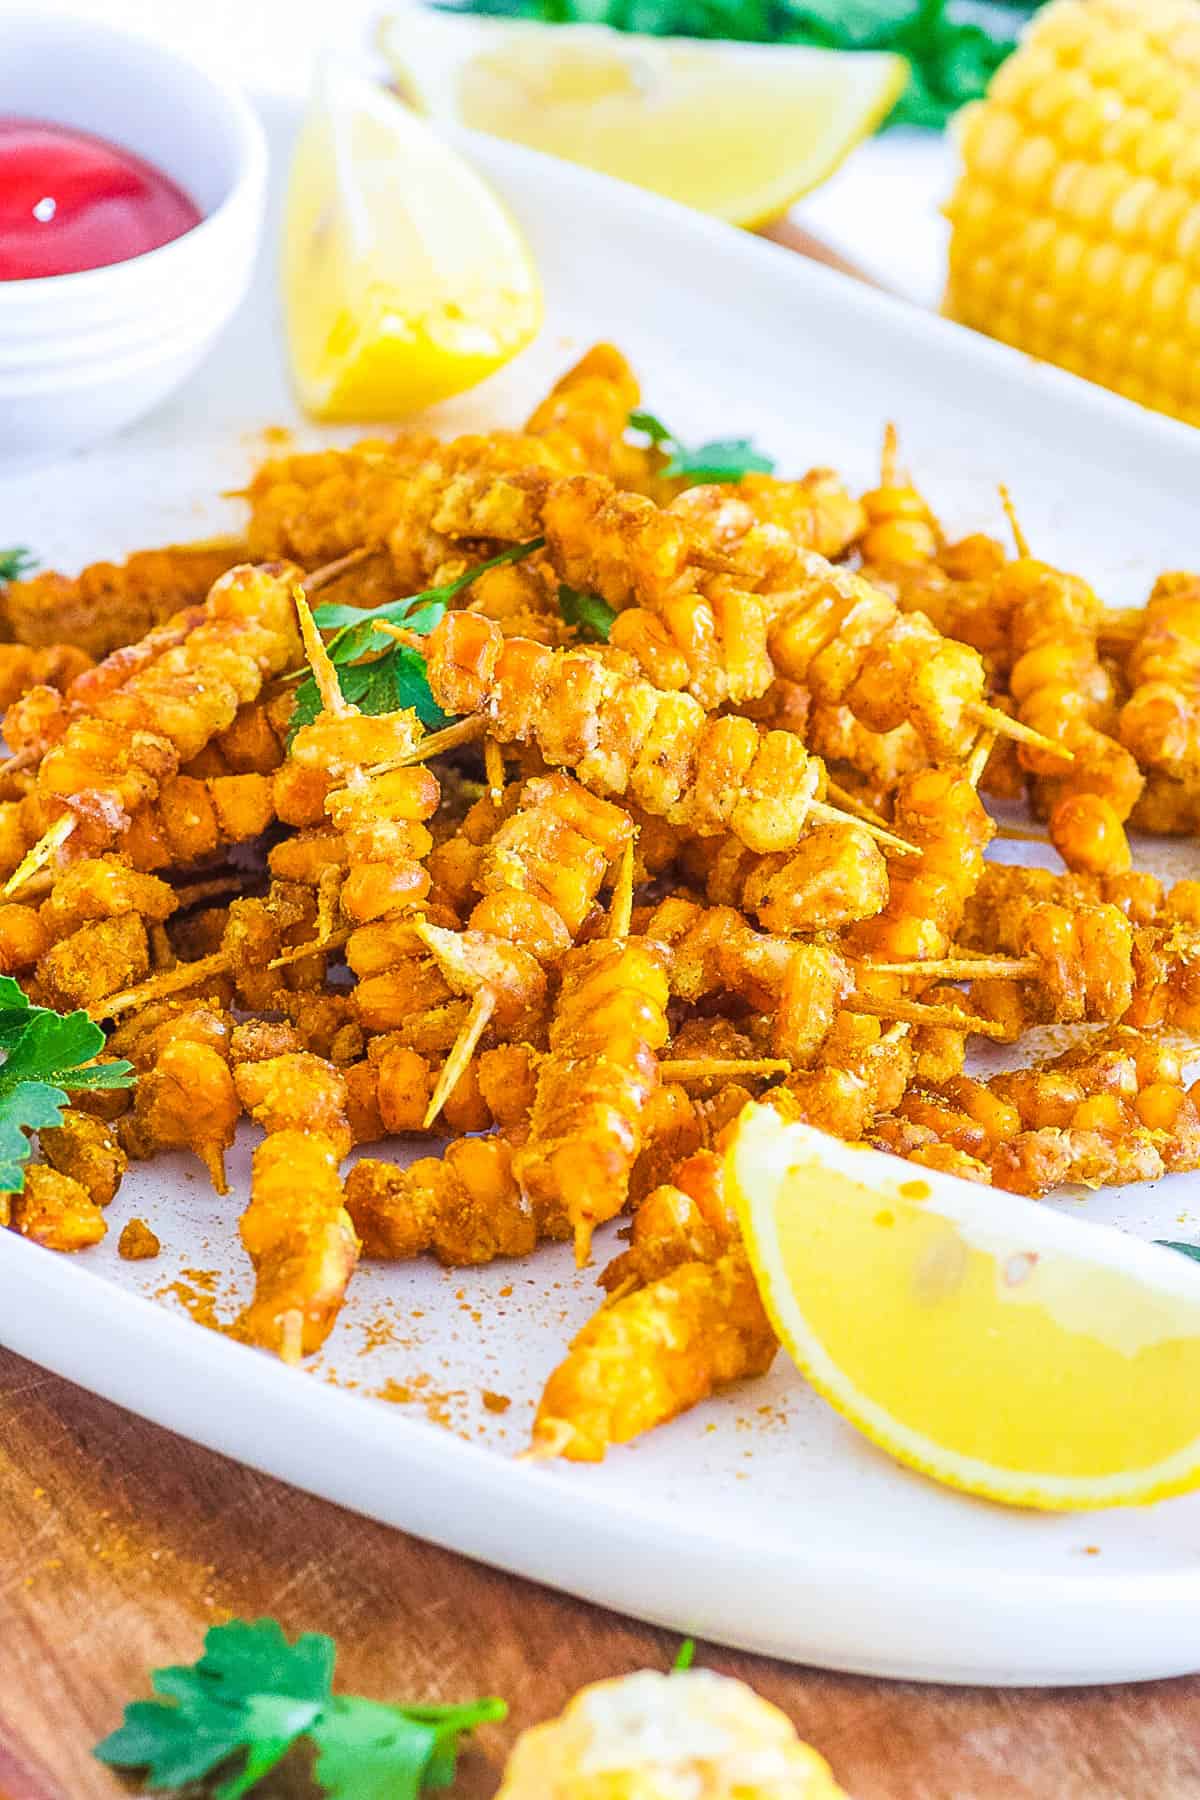 easy vegan gluten free healthy loaded corn fries recipe - masala corn fries on a white plate.